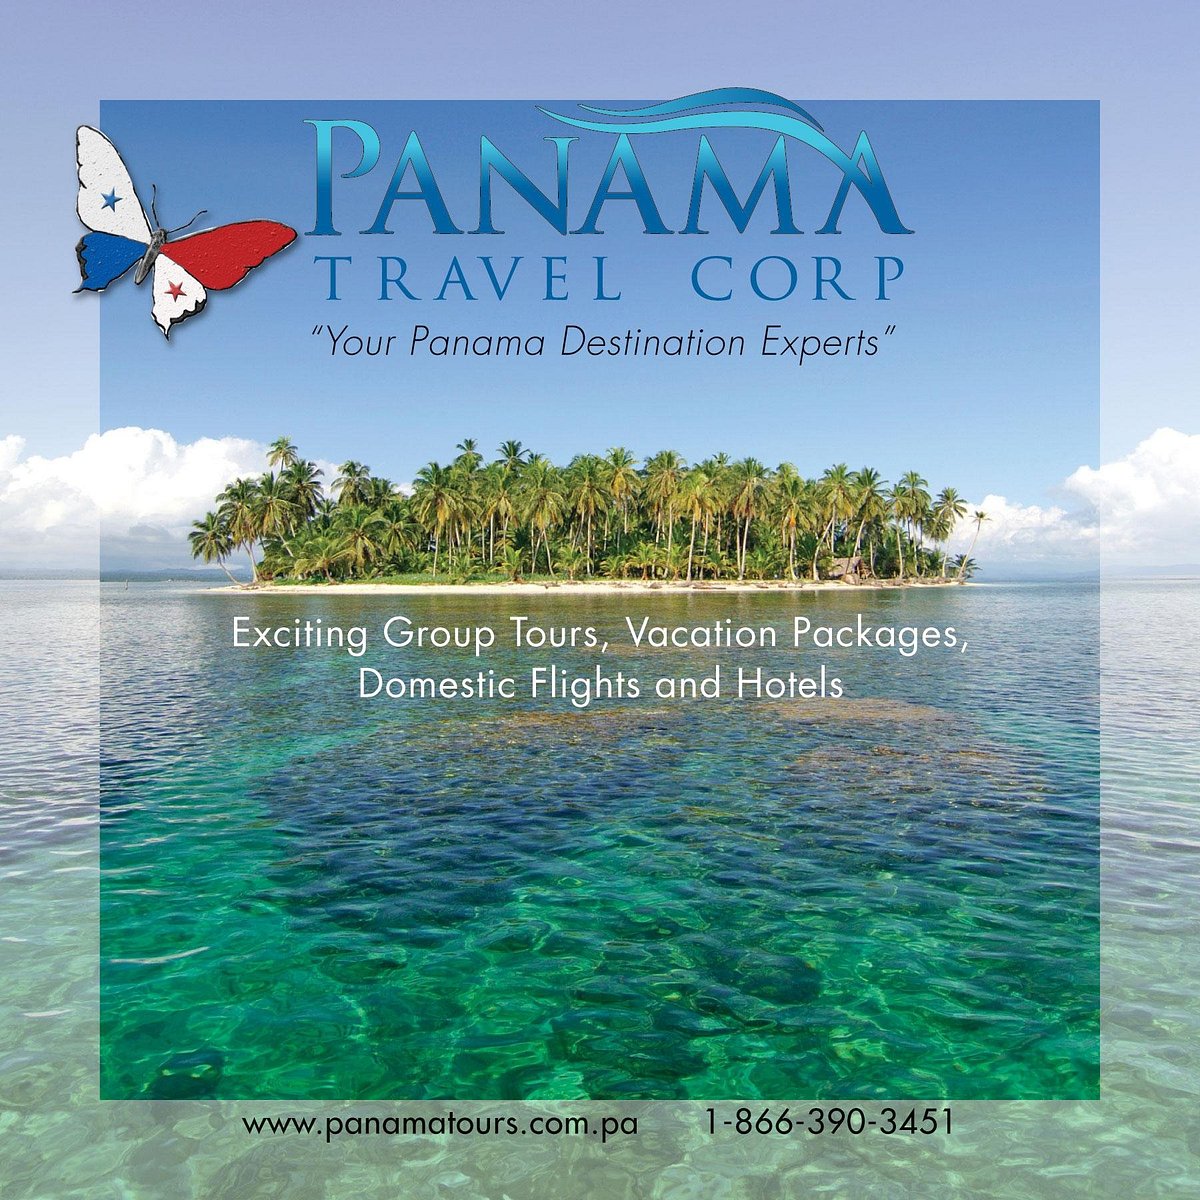 panama travel reviews